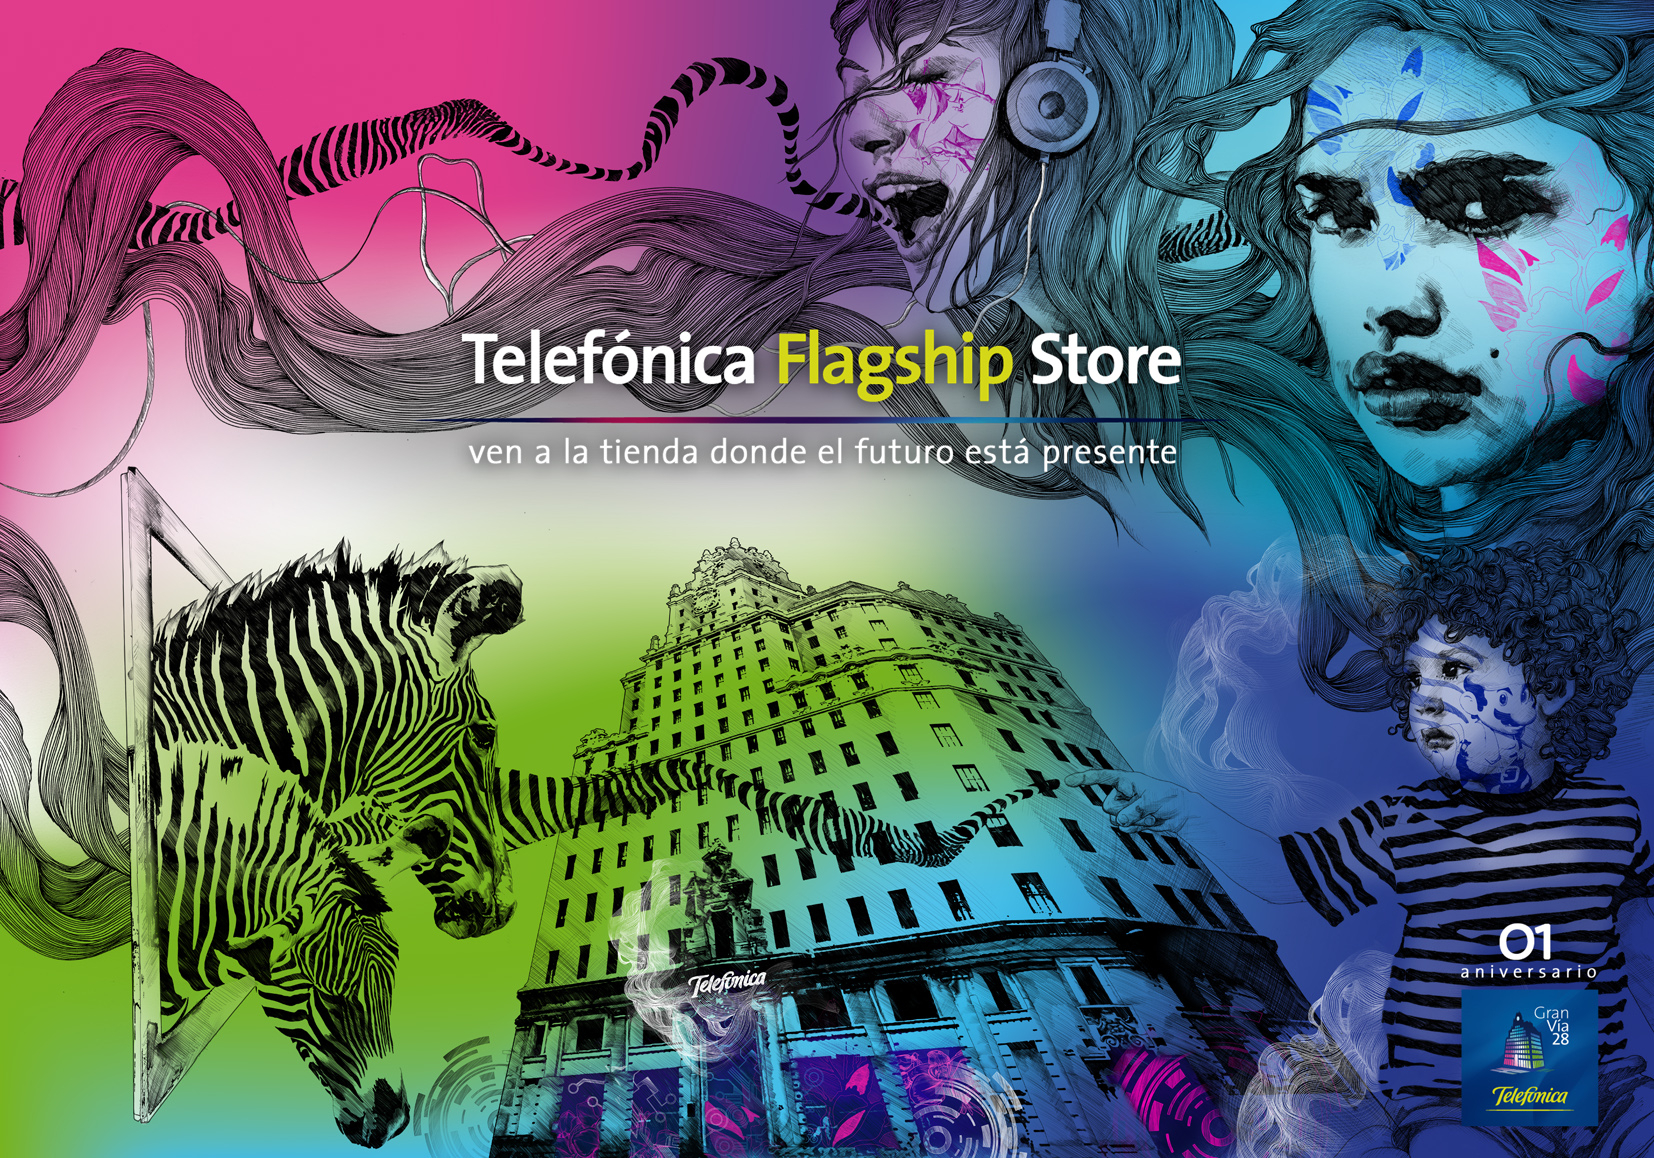 Telefonica Flagship Store Madrid